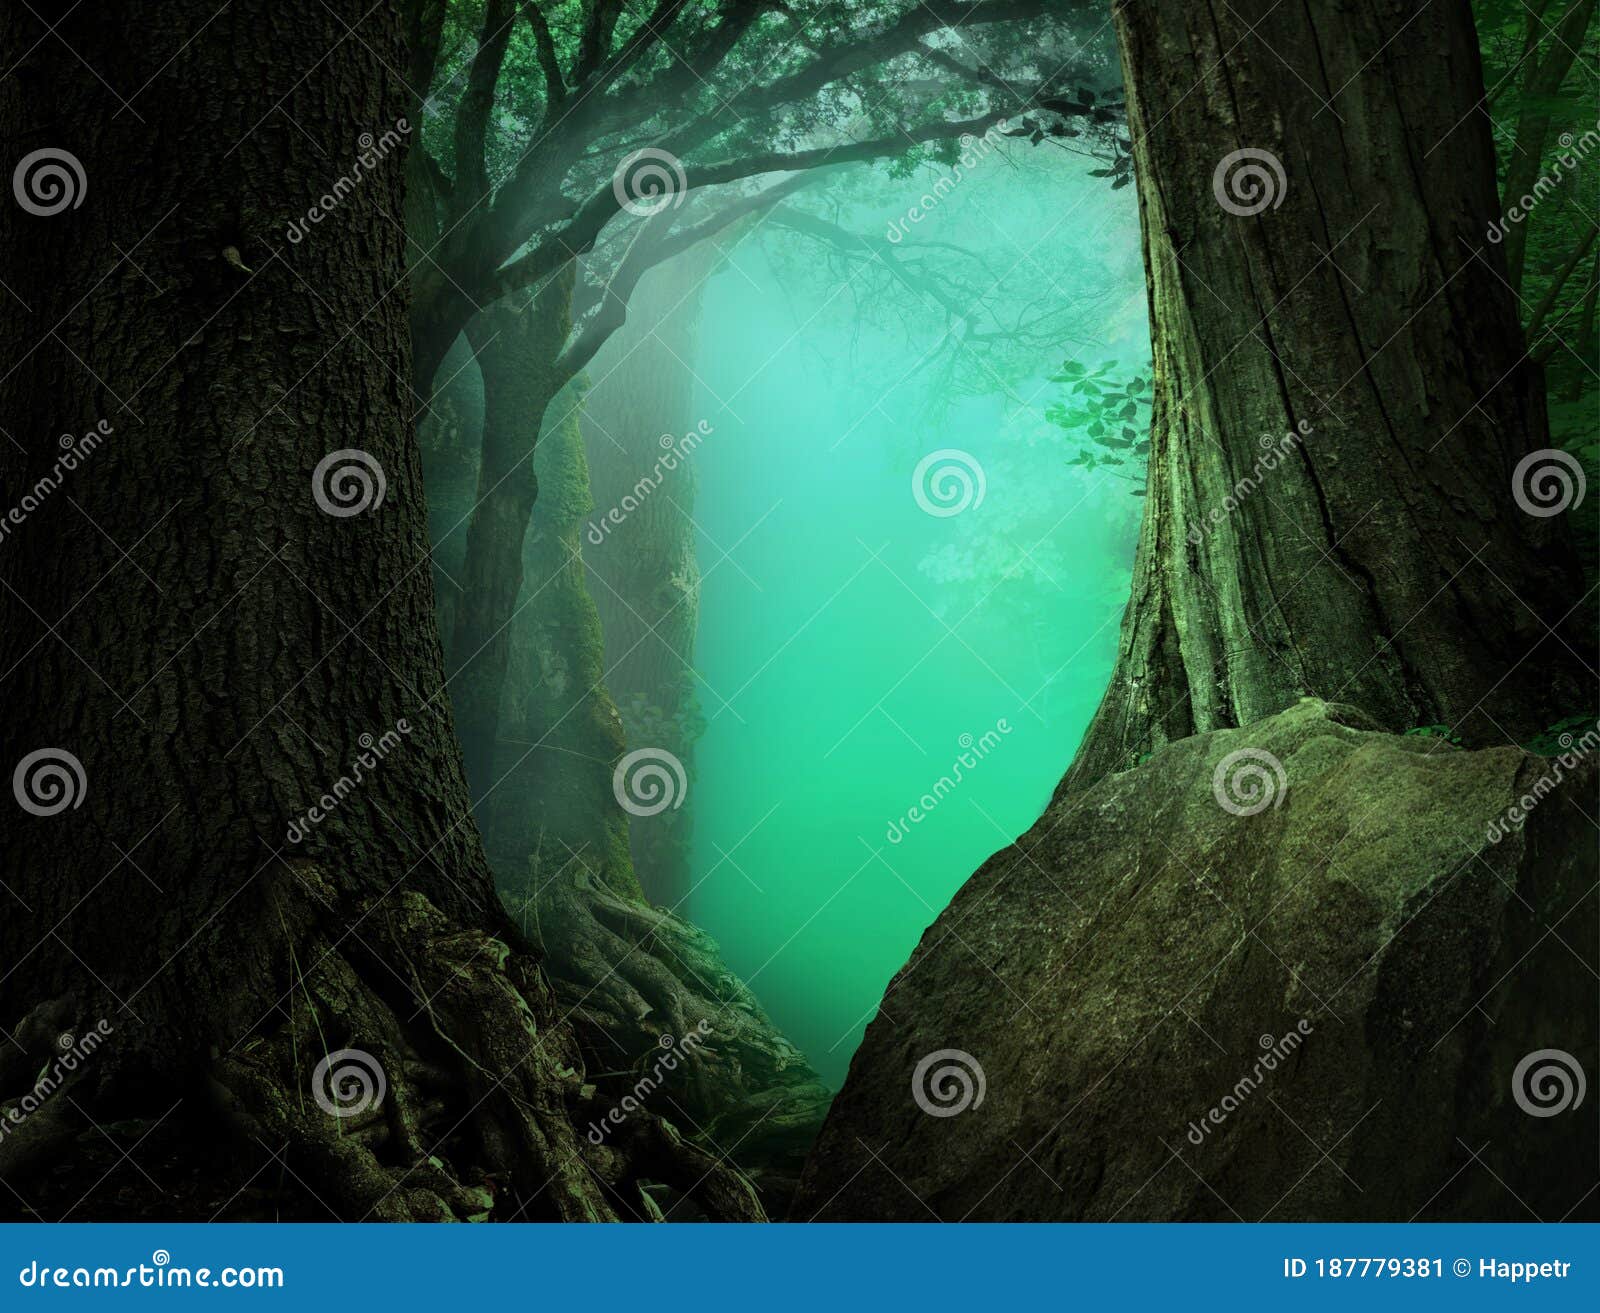 mysterious fantasy forest landscape with light blue transparent haze on a background